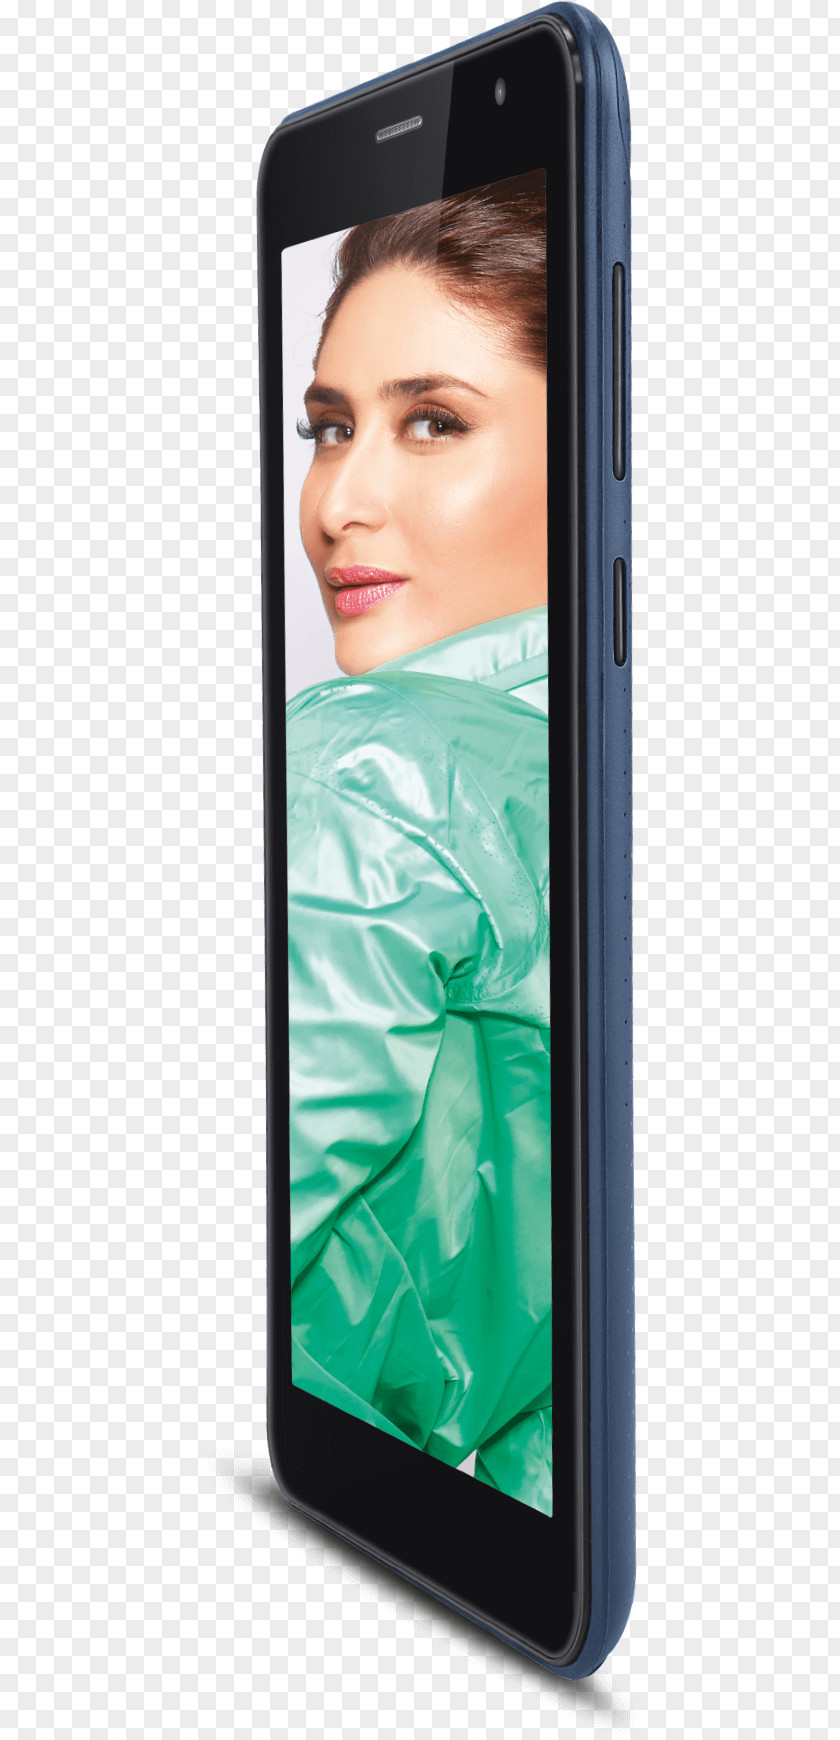 Kareena Kapoor Smartphone Mobile Phones Phone Accessories Electronics PNG